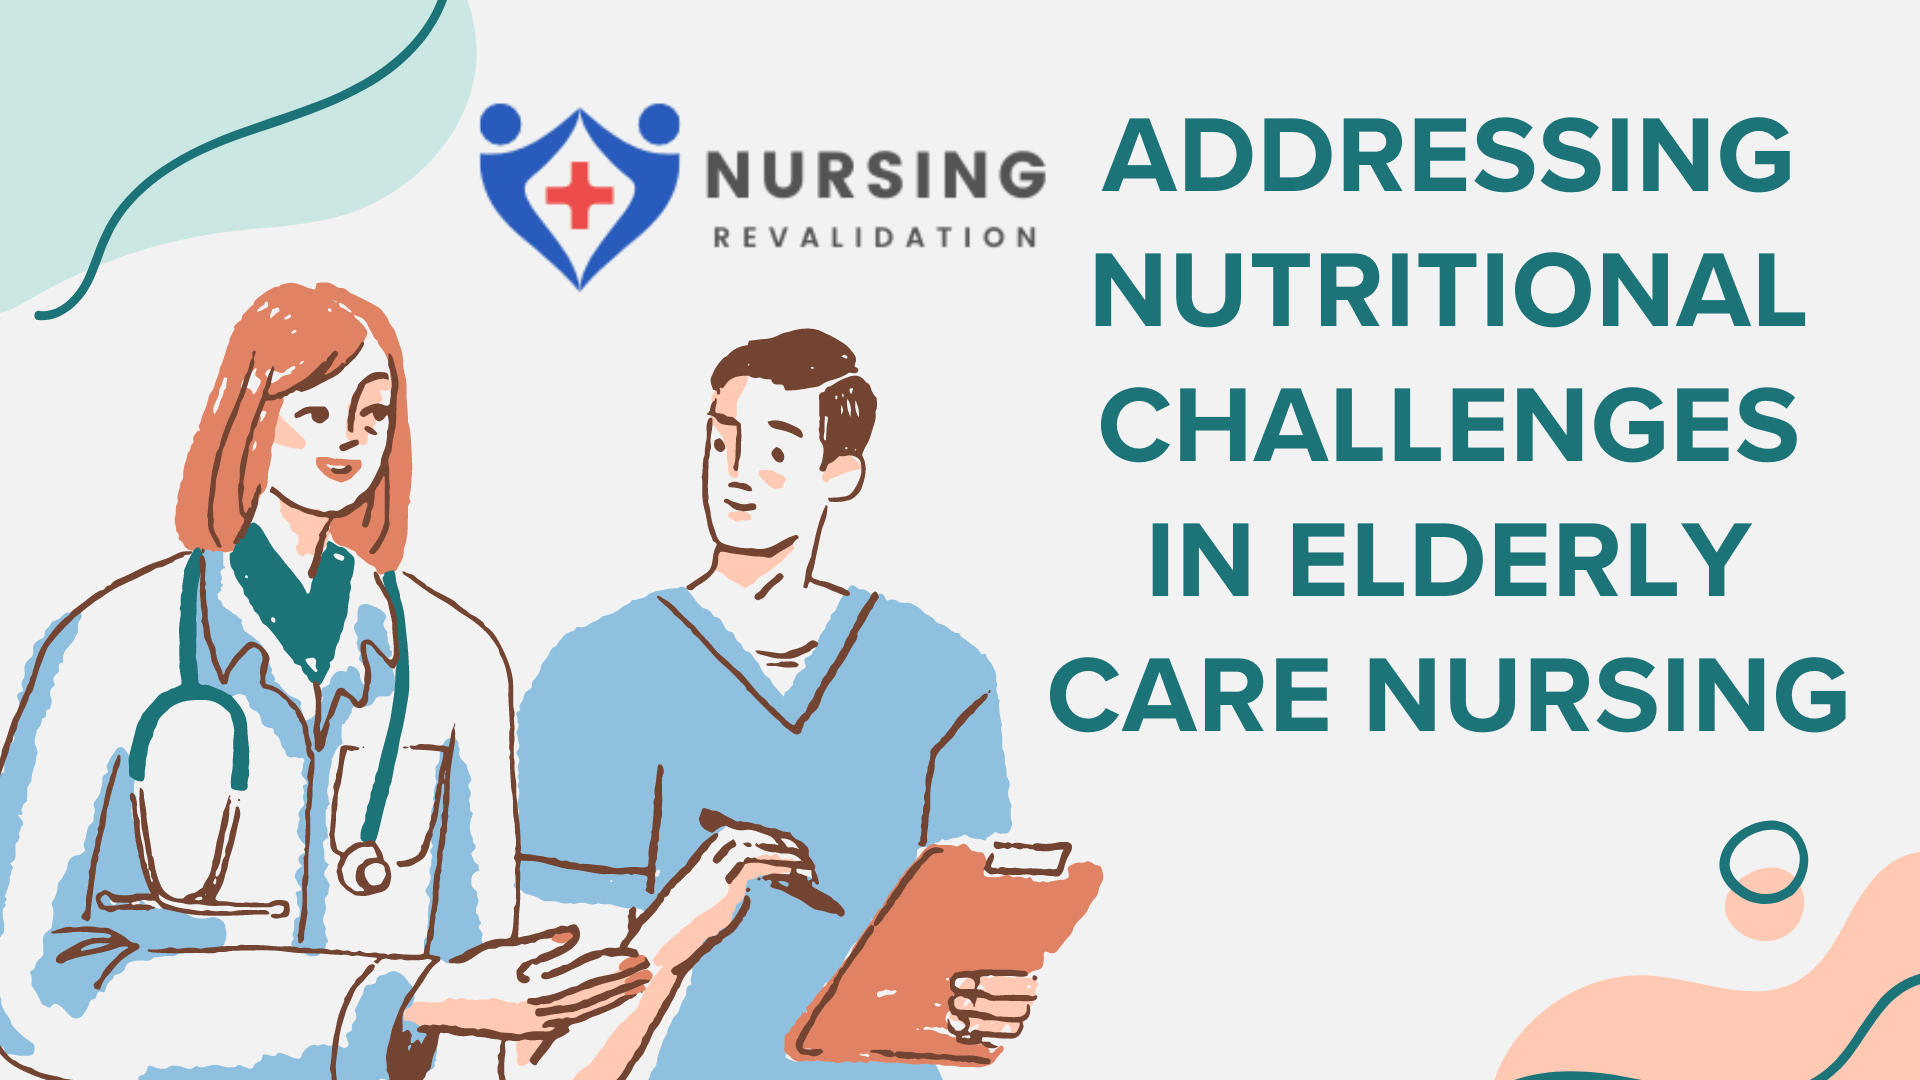 Addressing Nutritional Challenges in Elderly Care Nursing